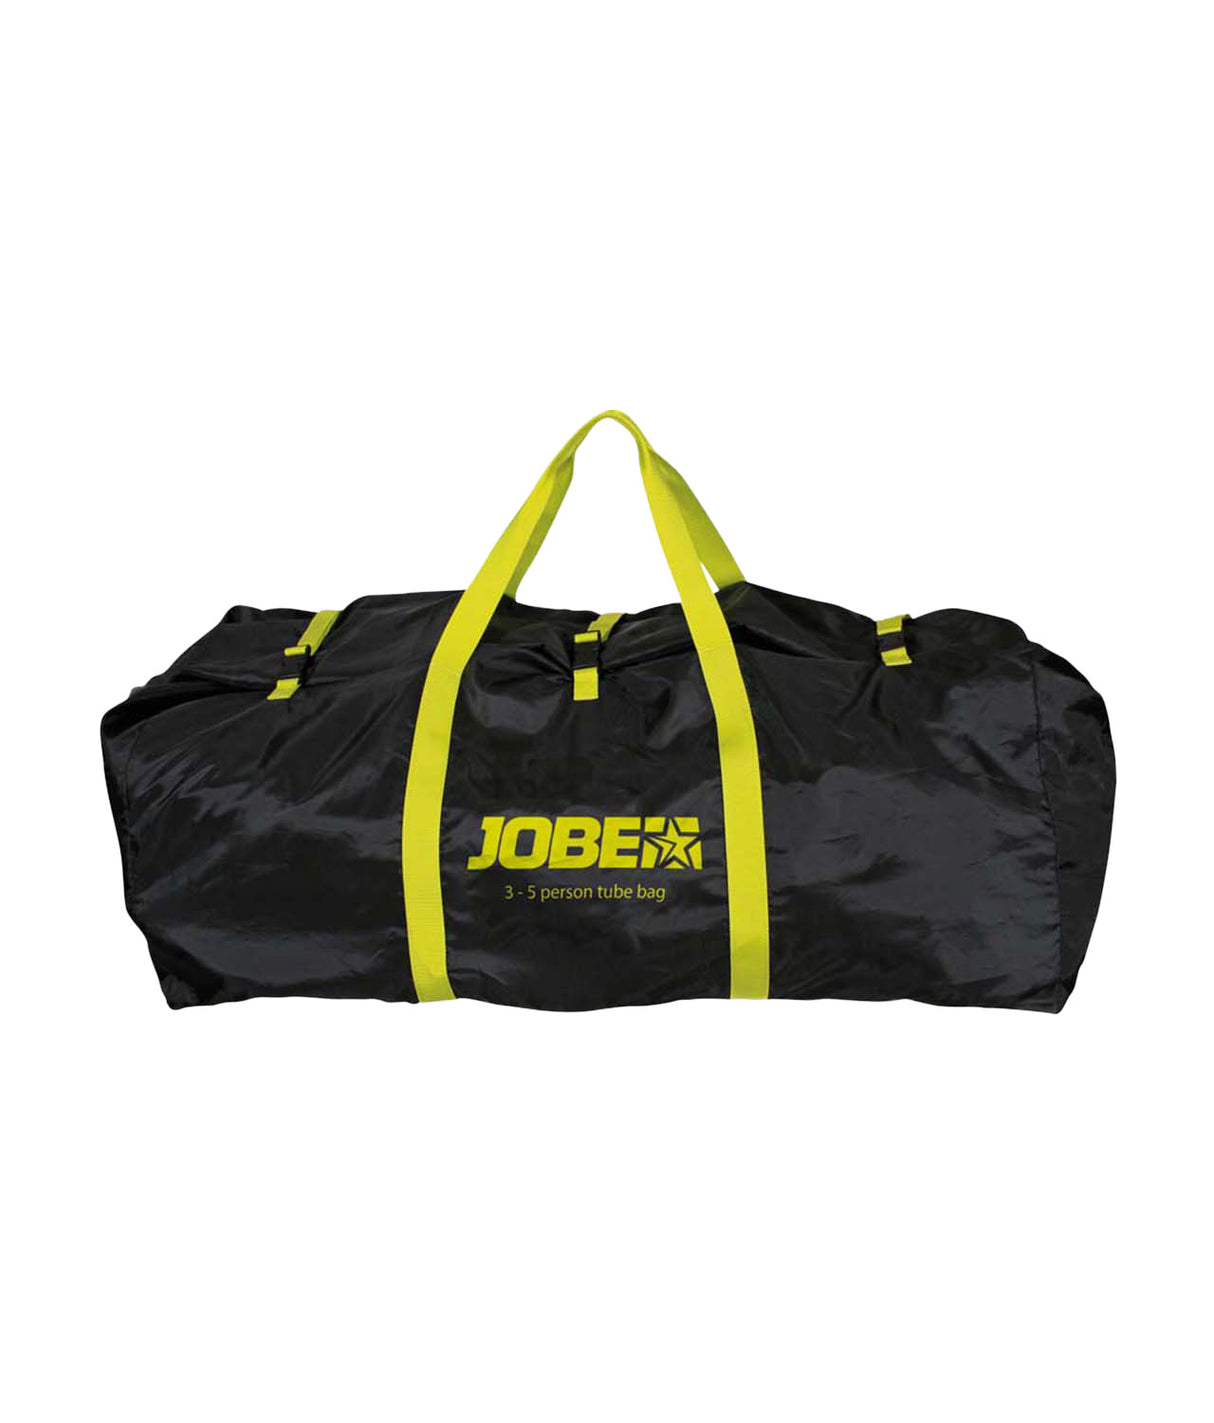 jobe tube bag 3-5p